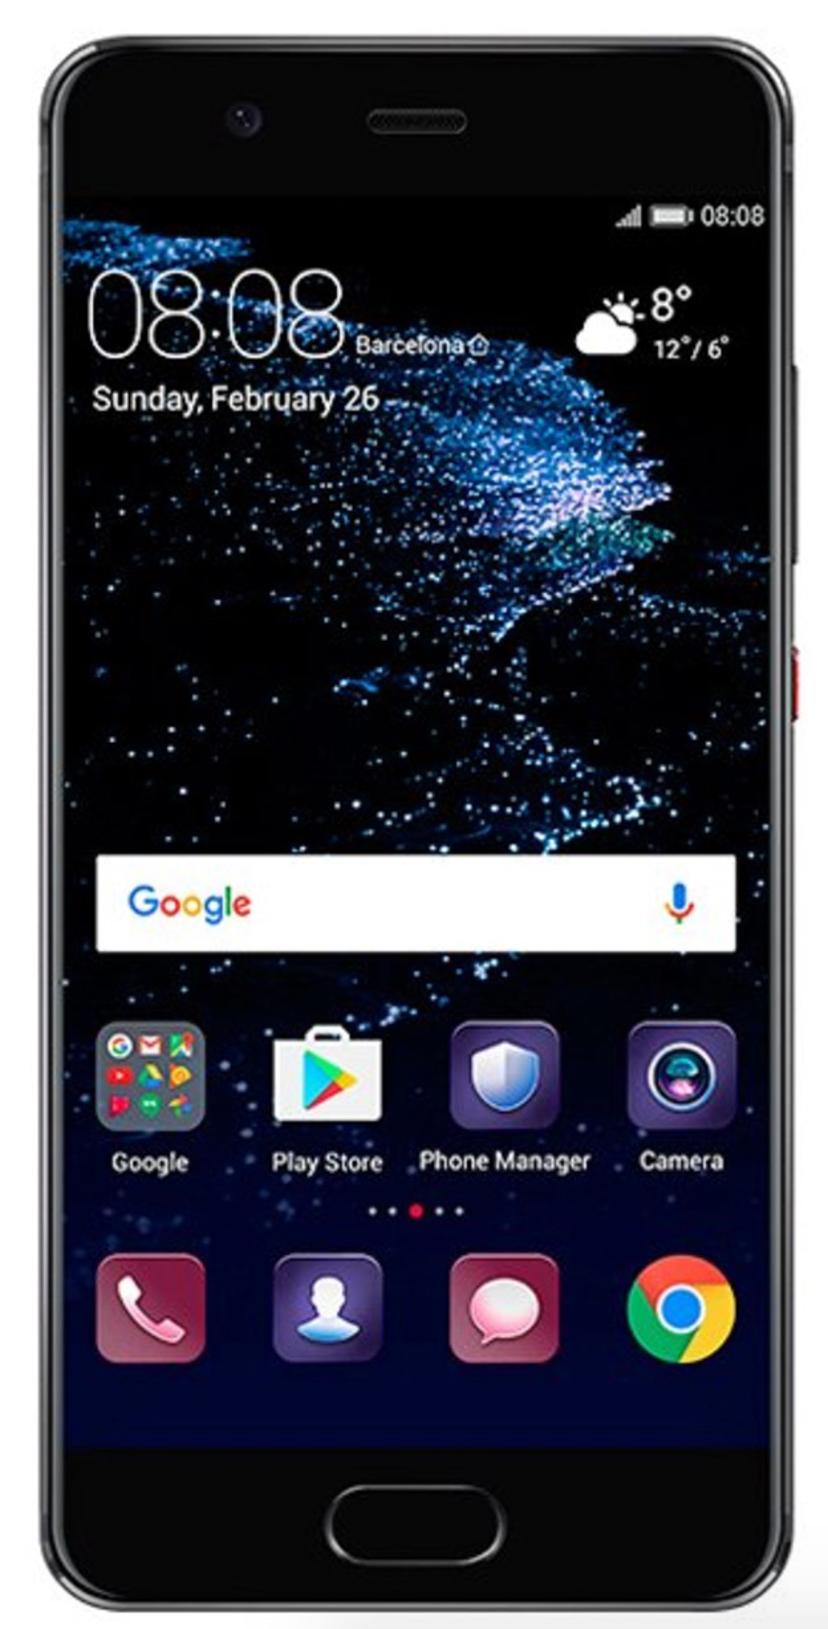 Huawei P10 64GB Dobbelt-SIM Grafittsvart